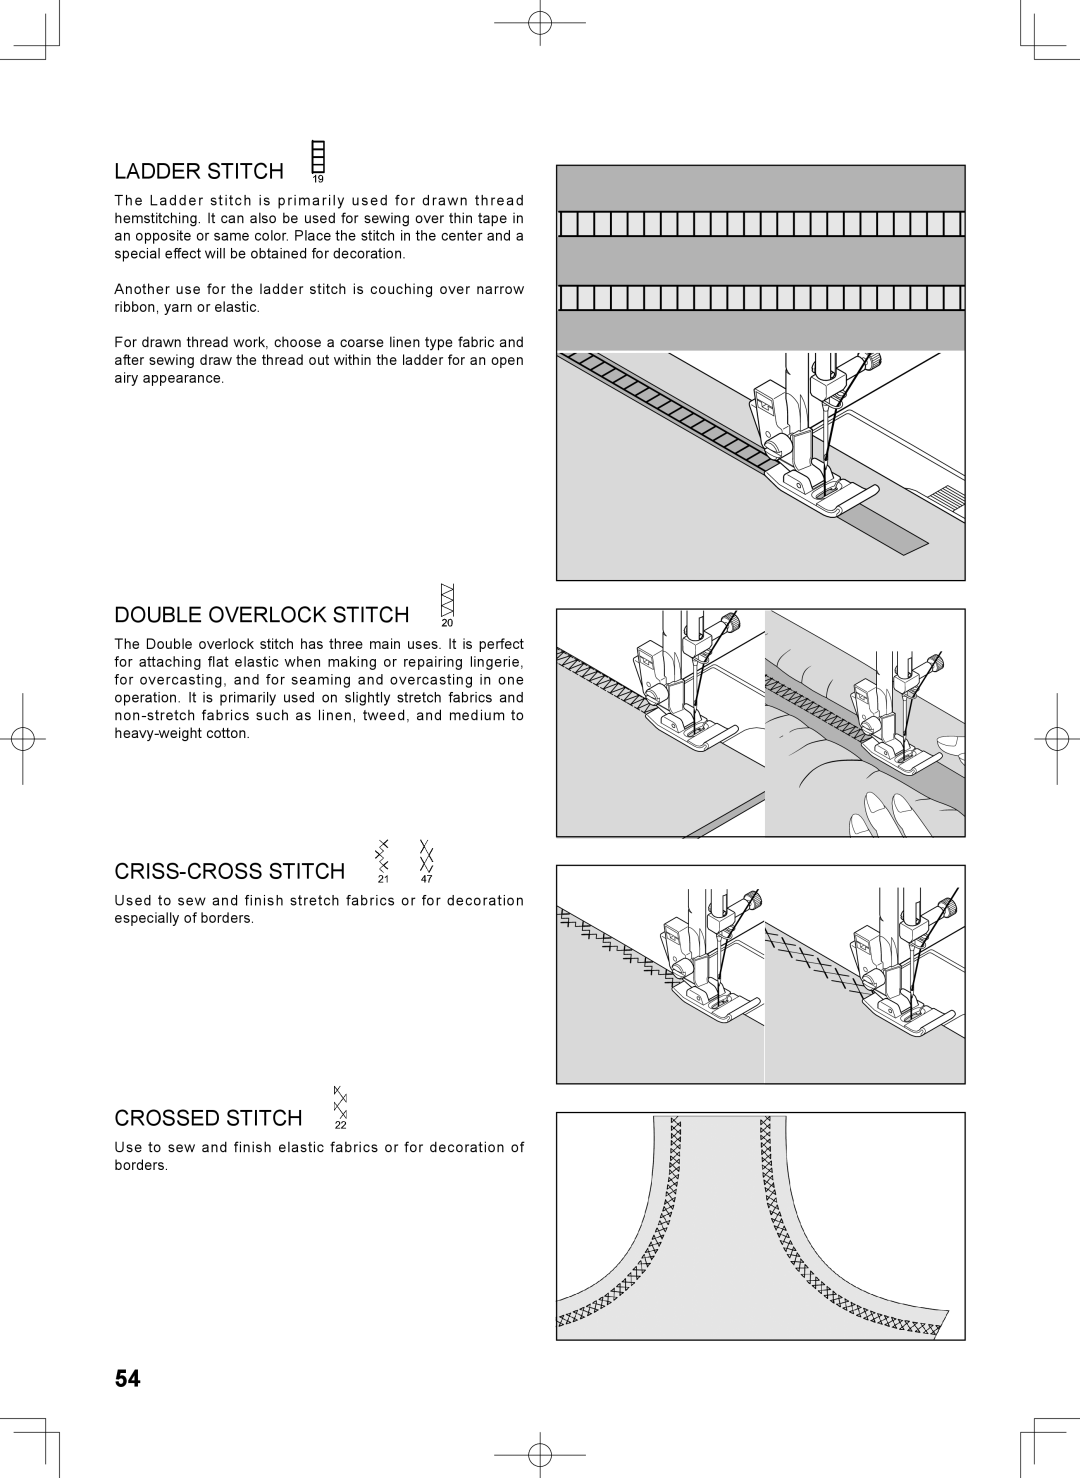 Singer 7467S instruction manual Ladder Stitch, Double Overlock Stitch, Criss-Cross Stitch, Crossed Stitch 